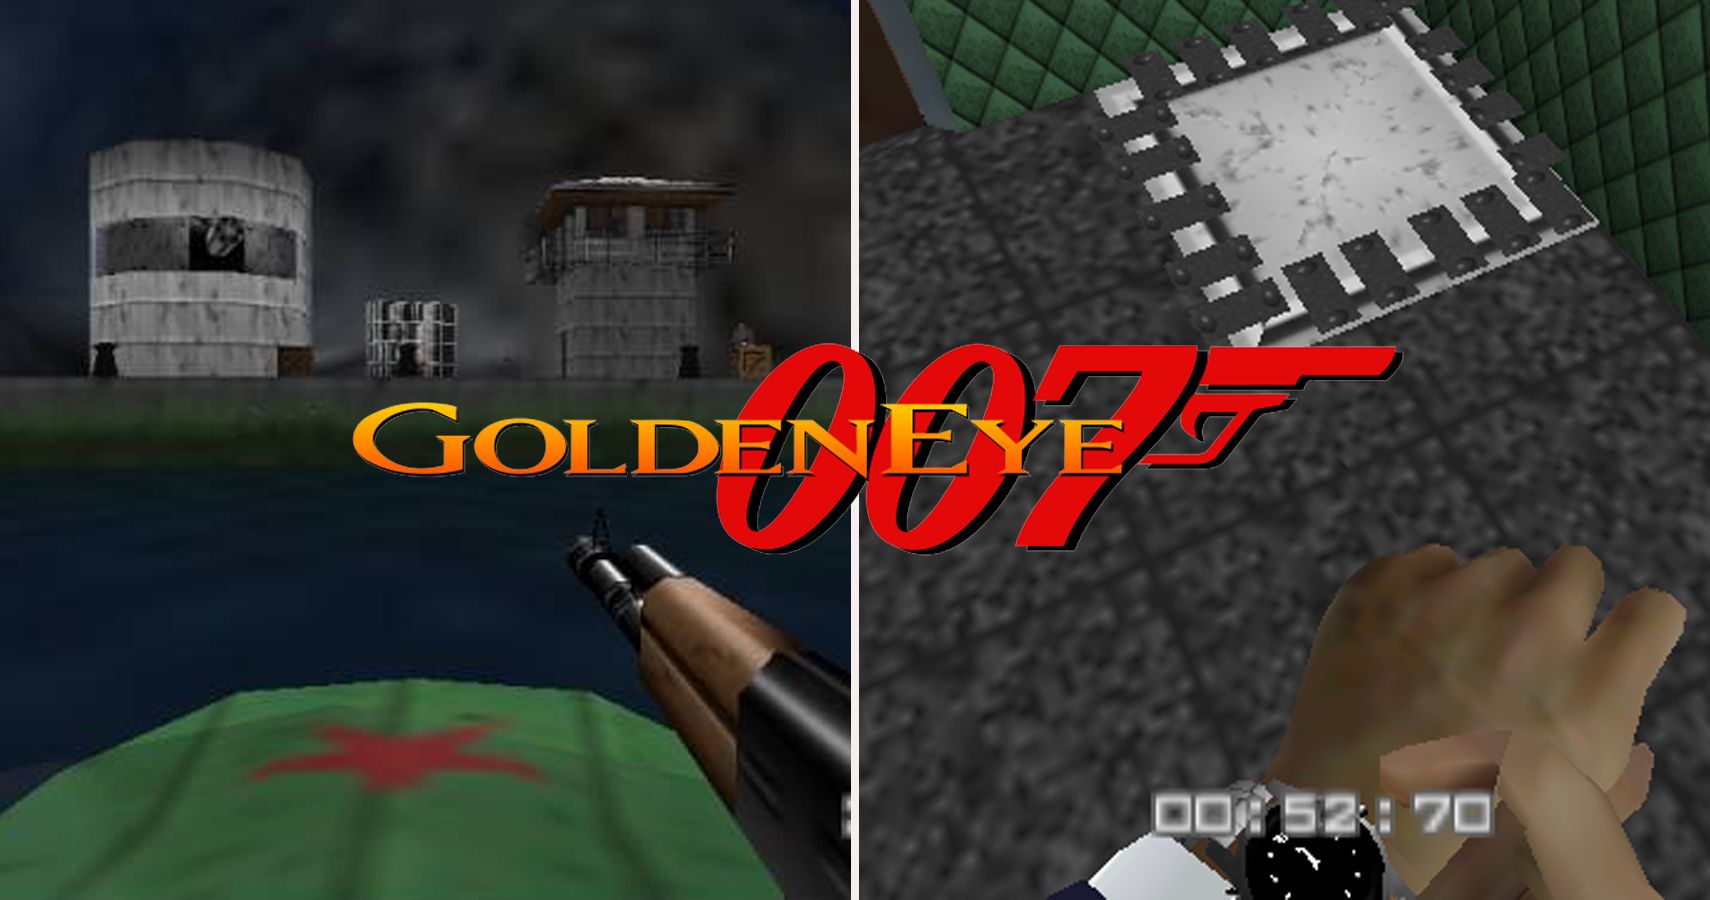 GoldenEye 007 REVIEW: What's The Hype? (XSS) - FandomWire